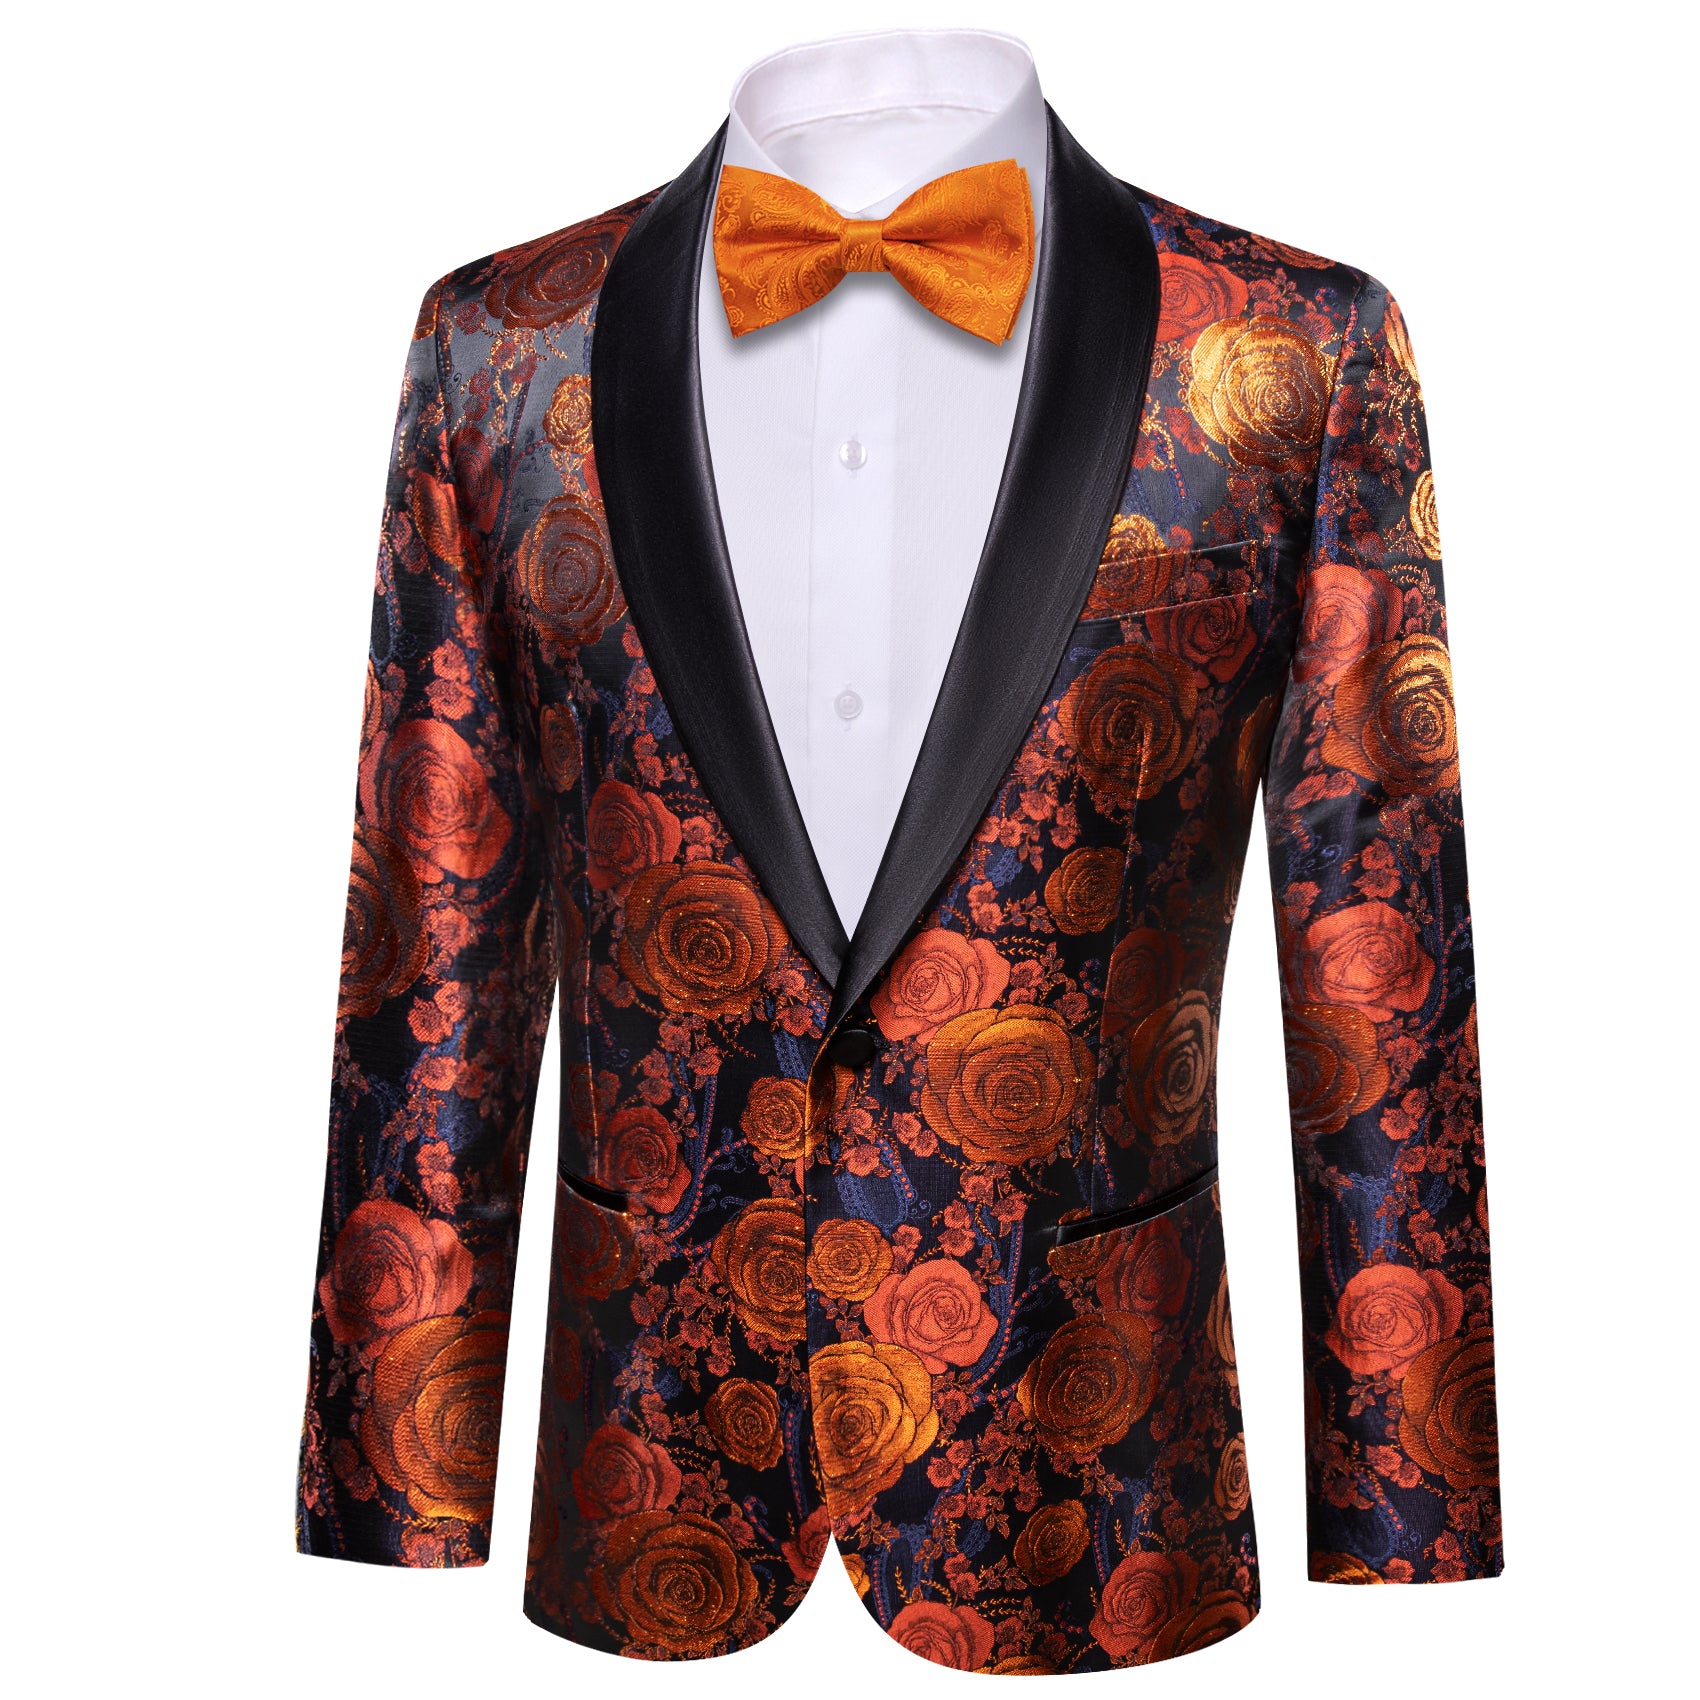 Men's Dress Party Orange Blue Flower Suit Jacket Slim One Button Stylish Blazer